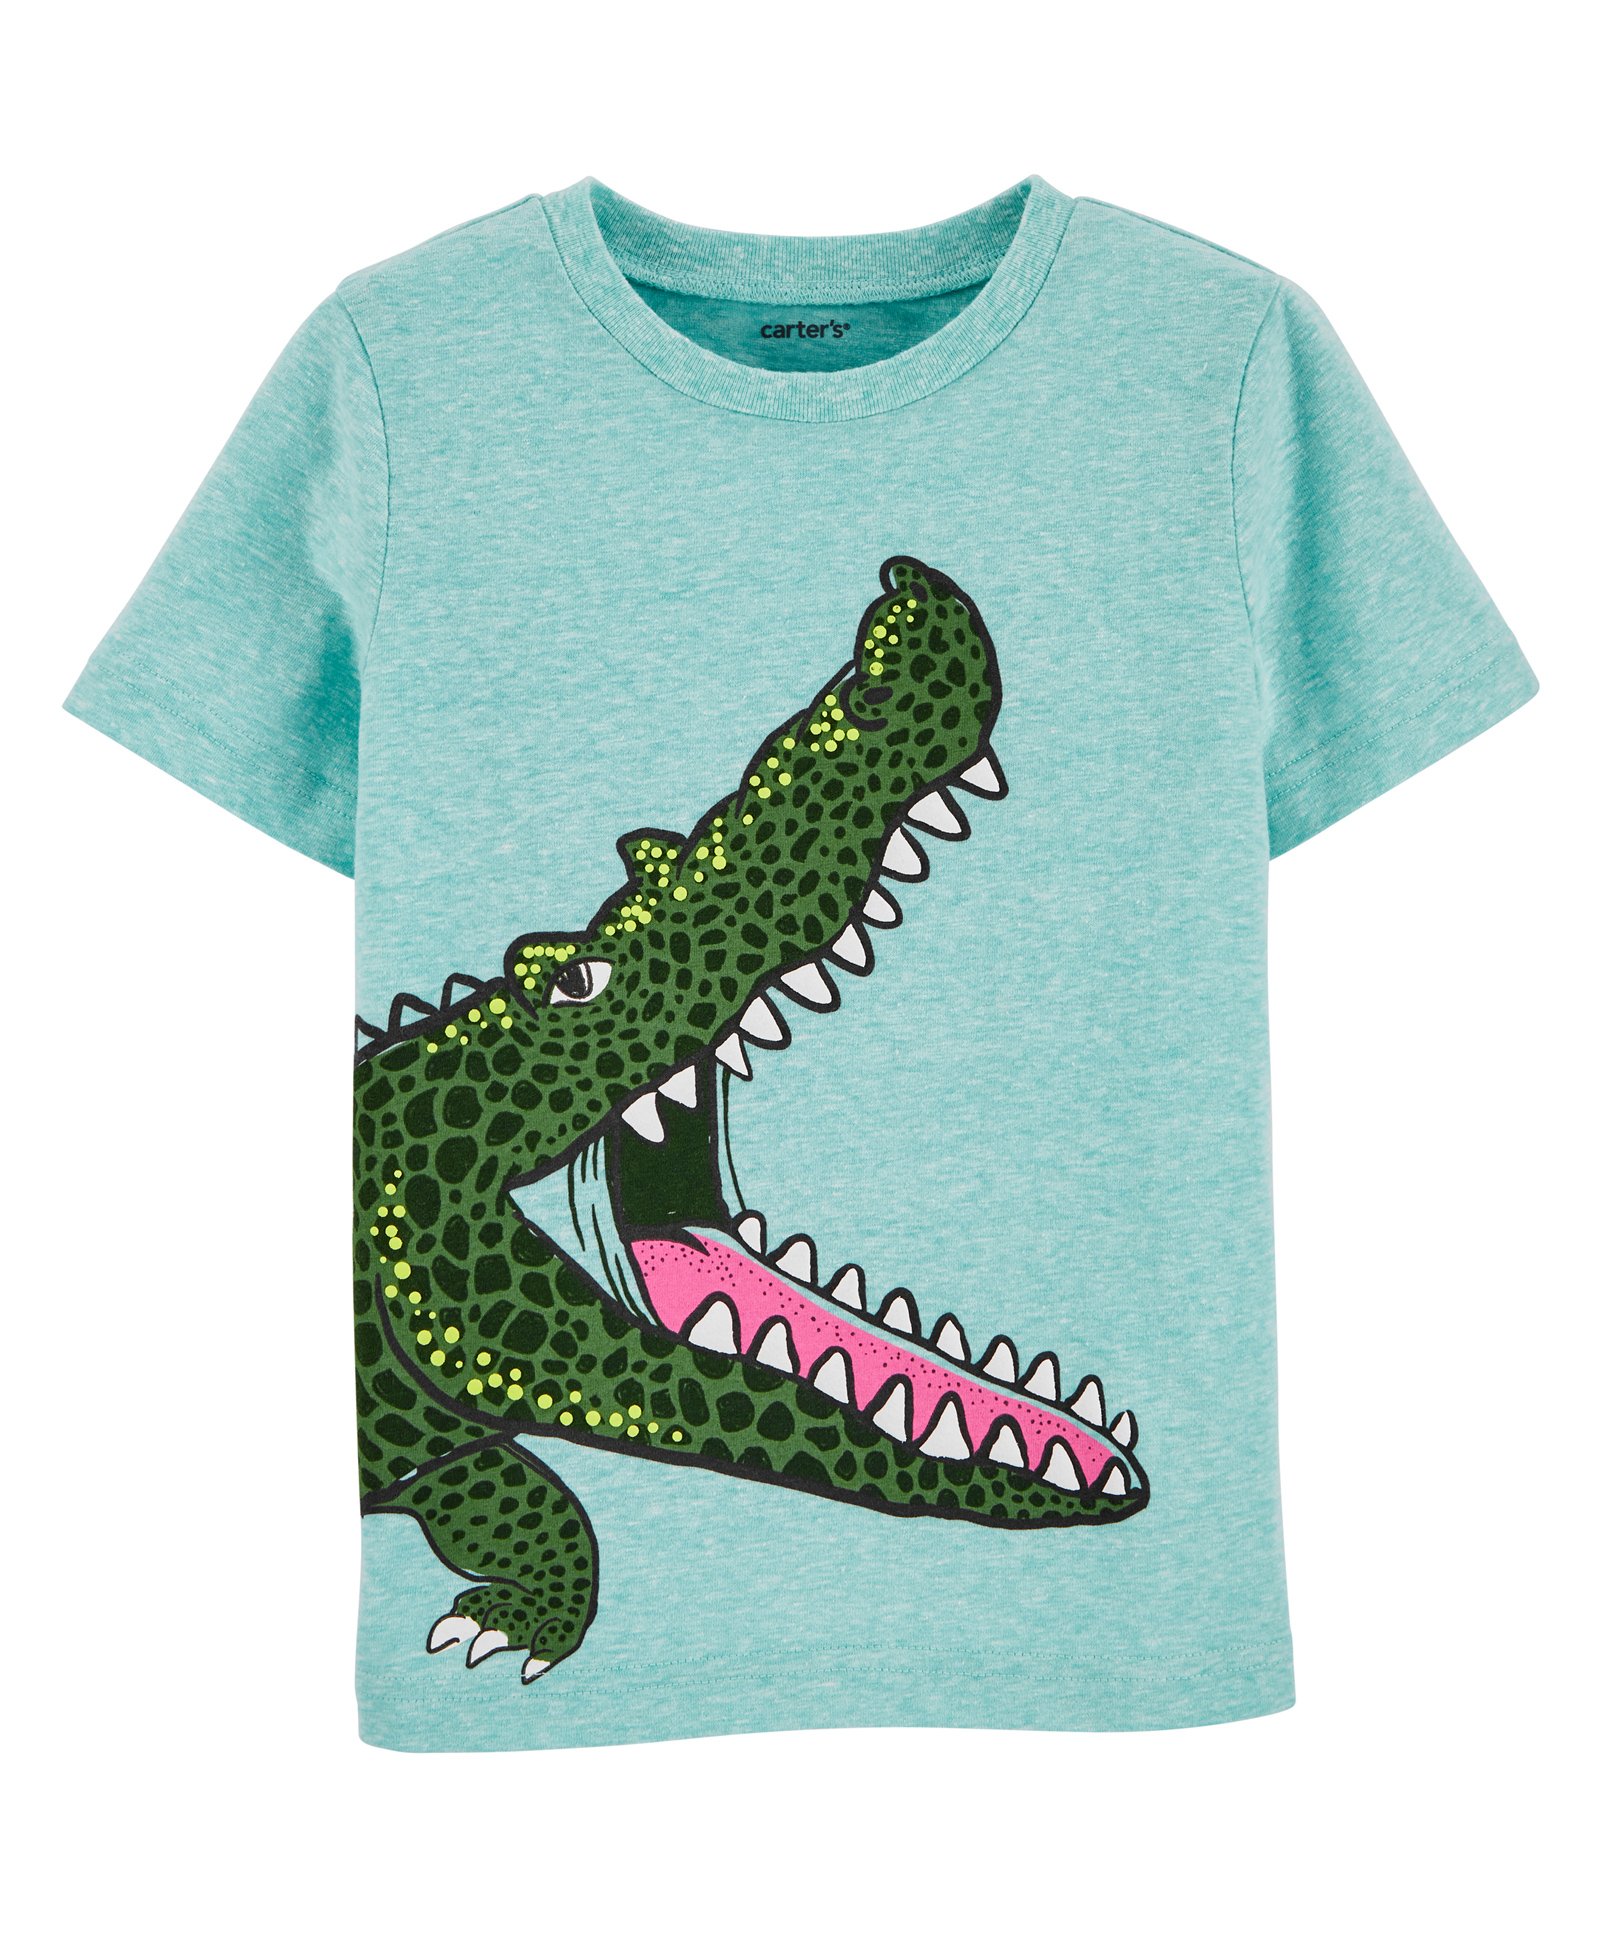 alligator icon on shirt